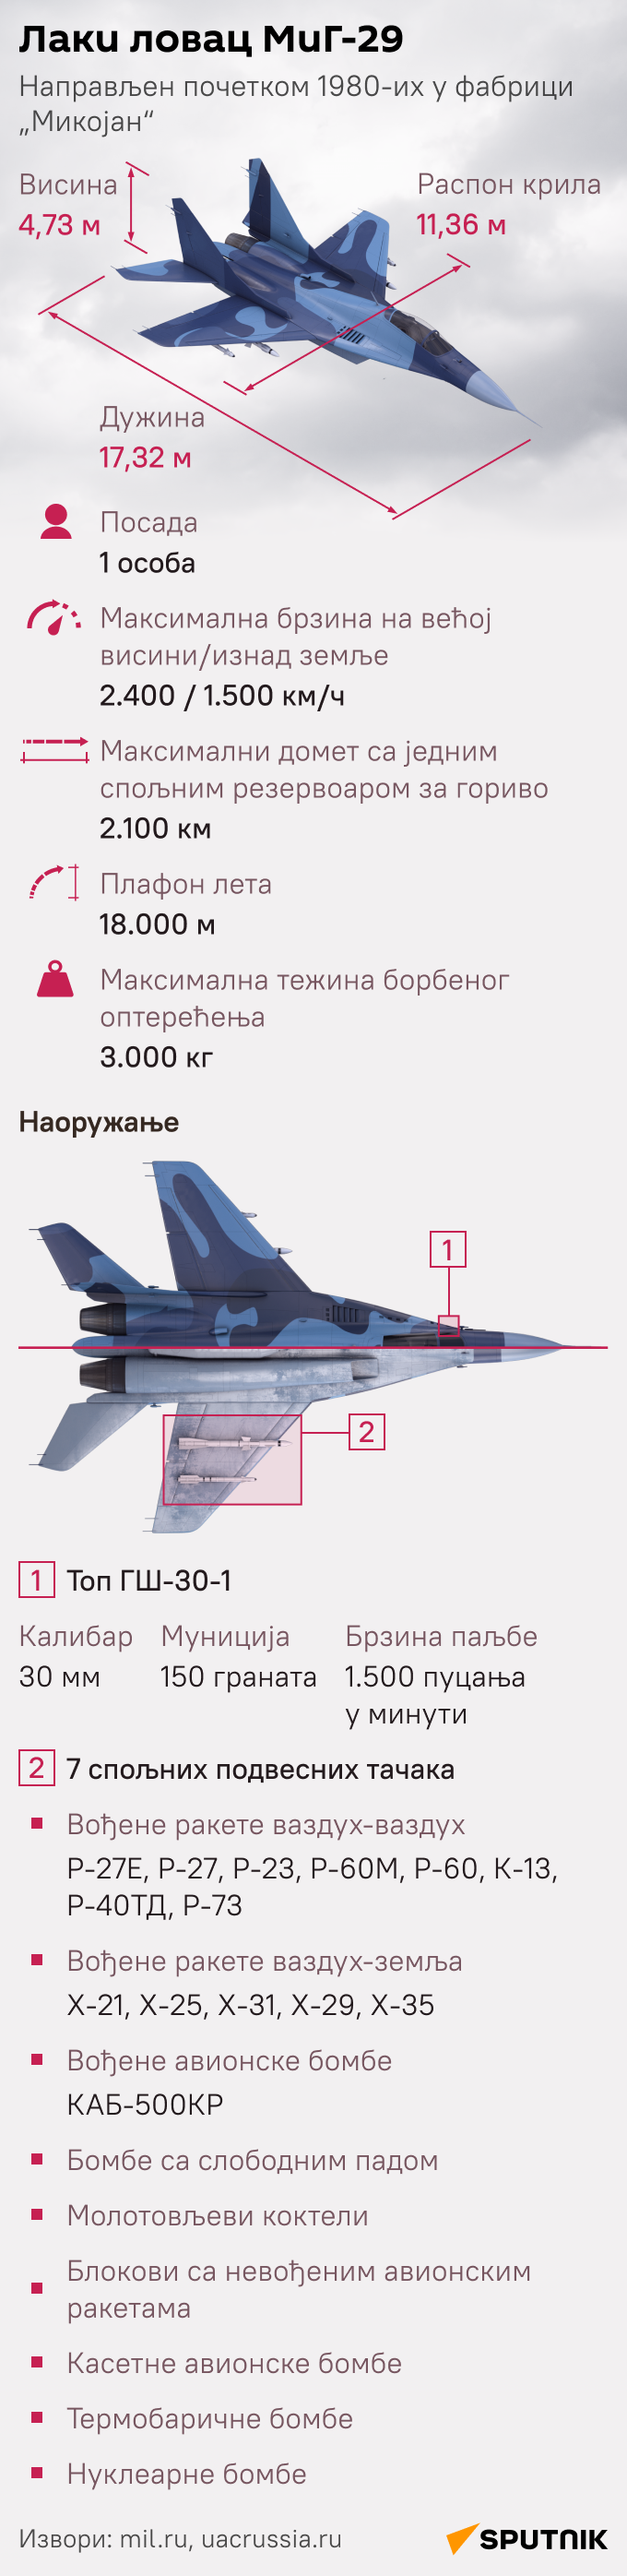 Инфографика МиГ-29 ЋИР моб - Sputnik Србија